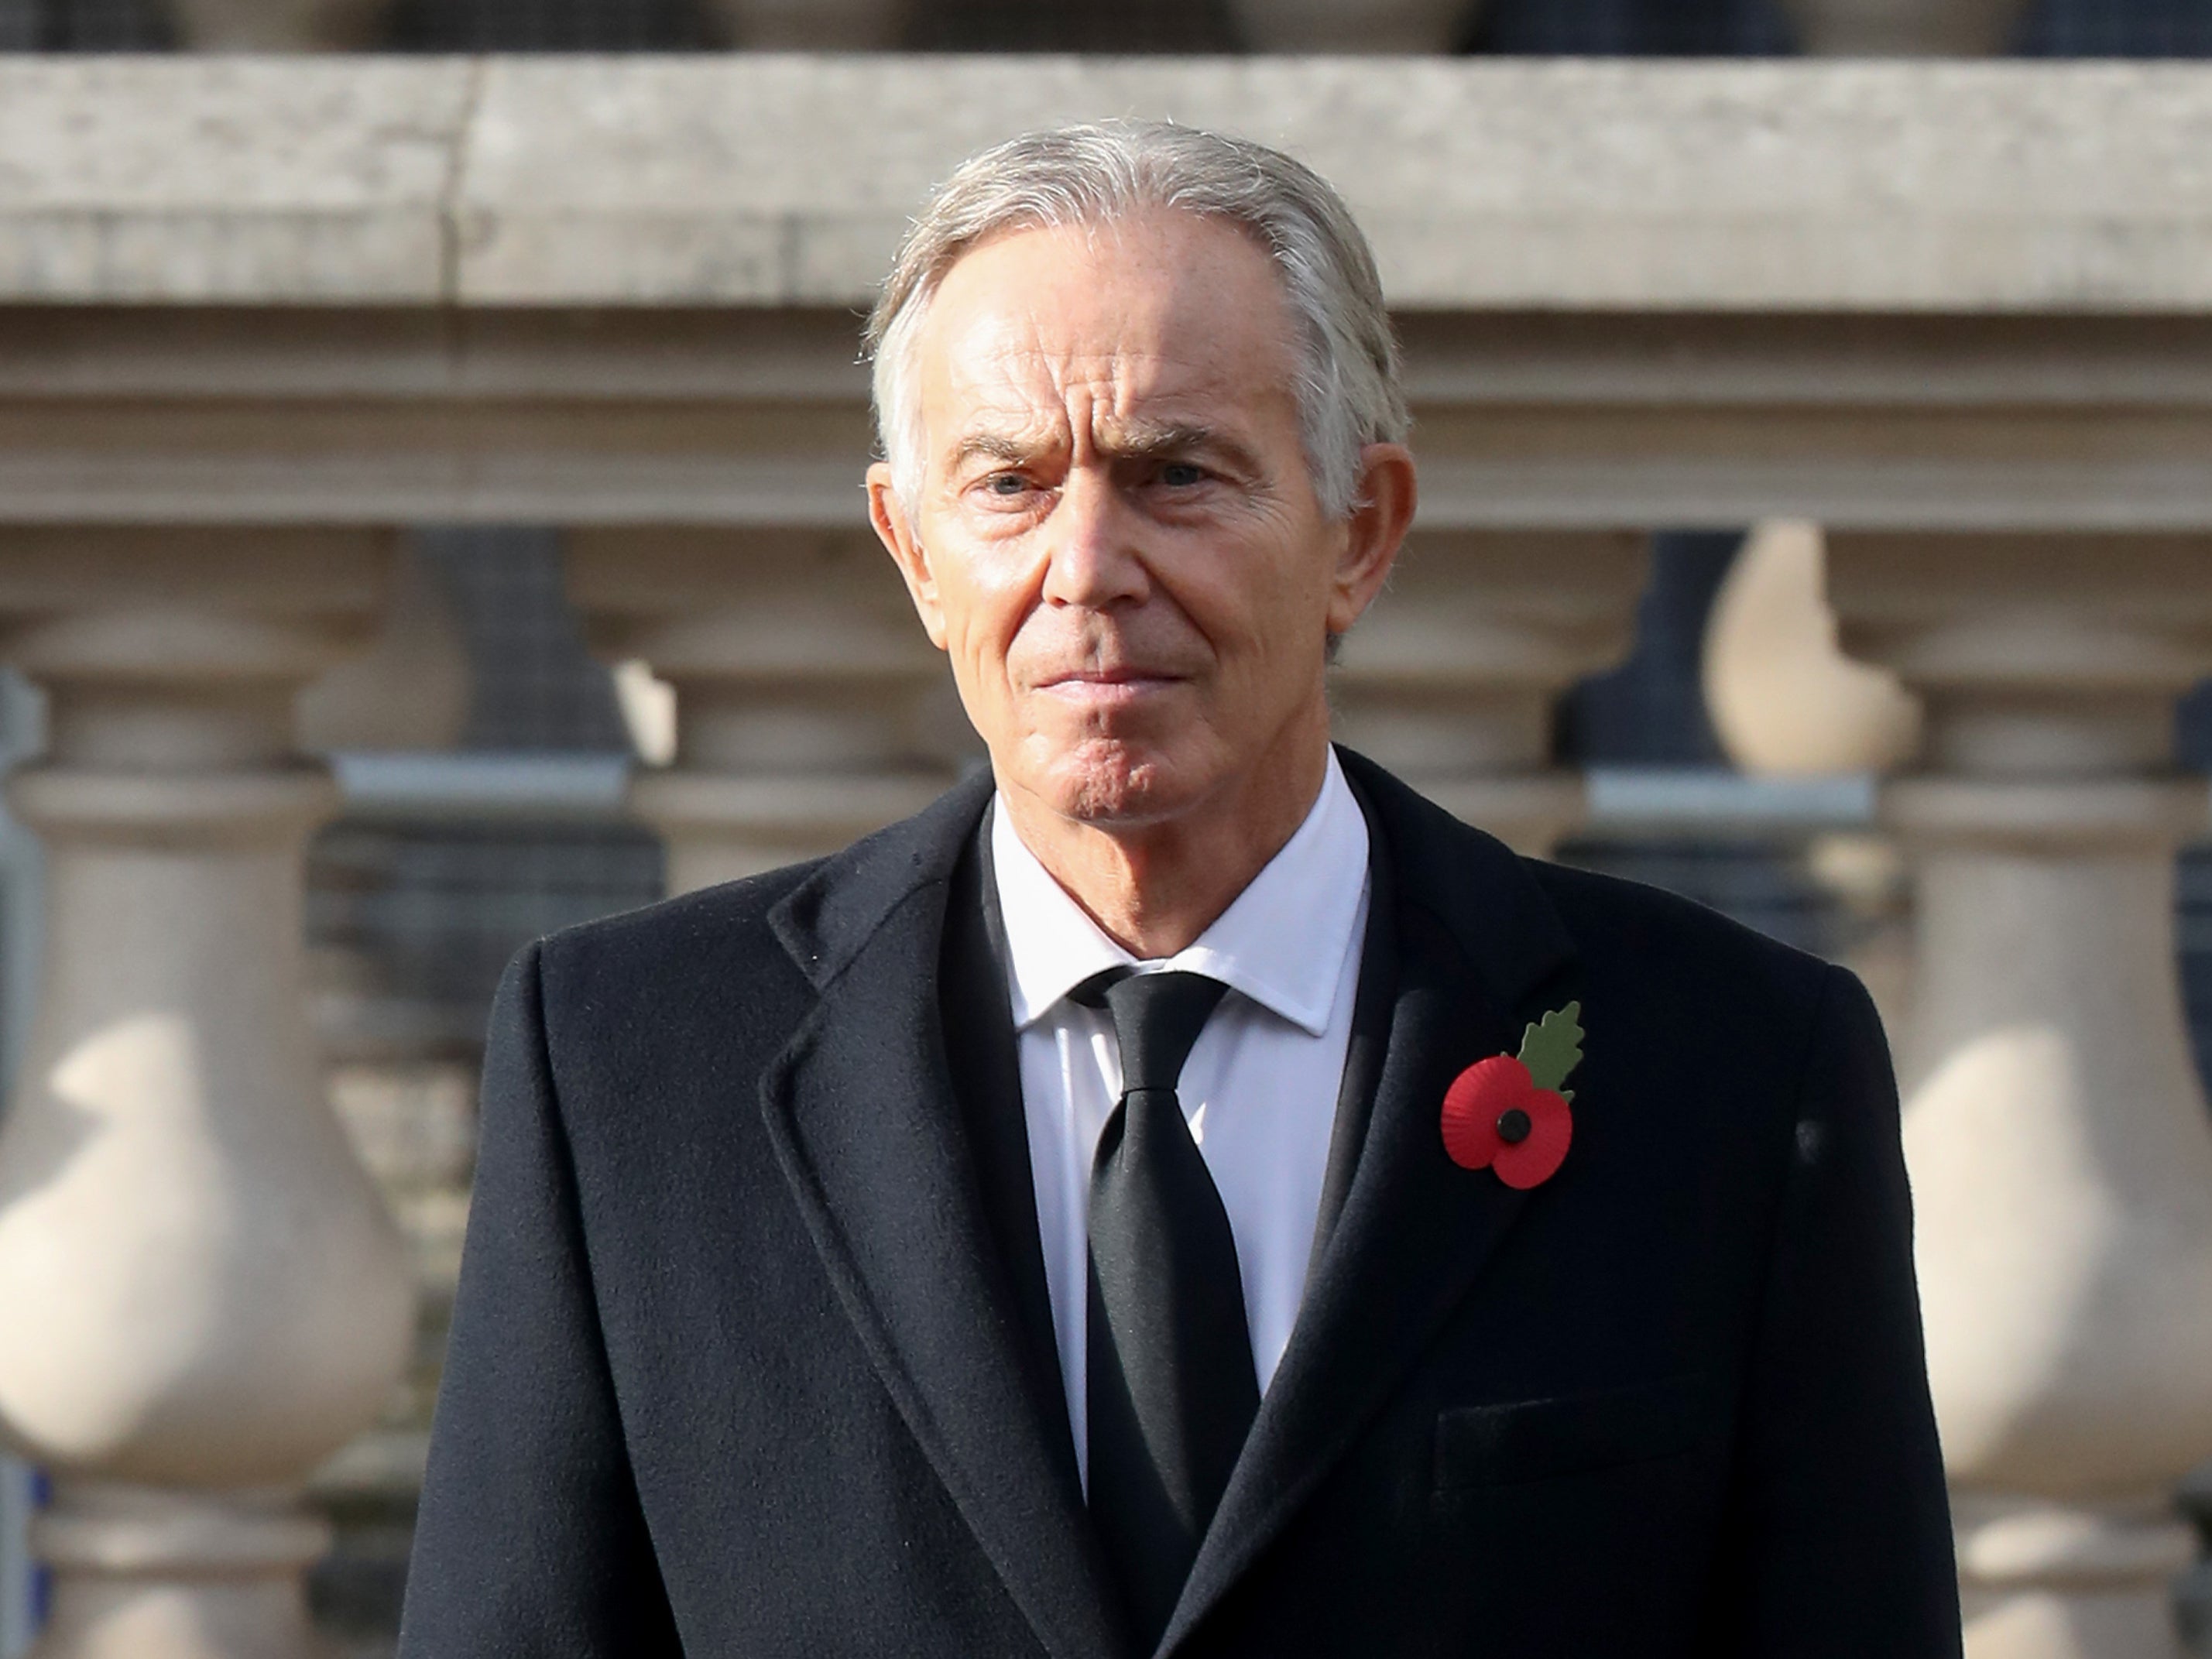 Blair pictured in November 2020